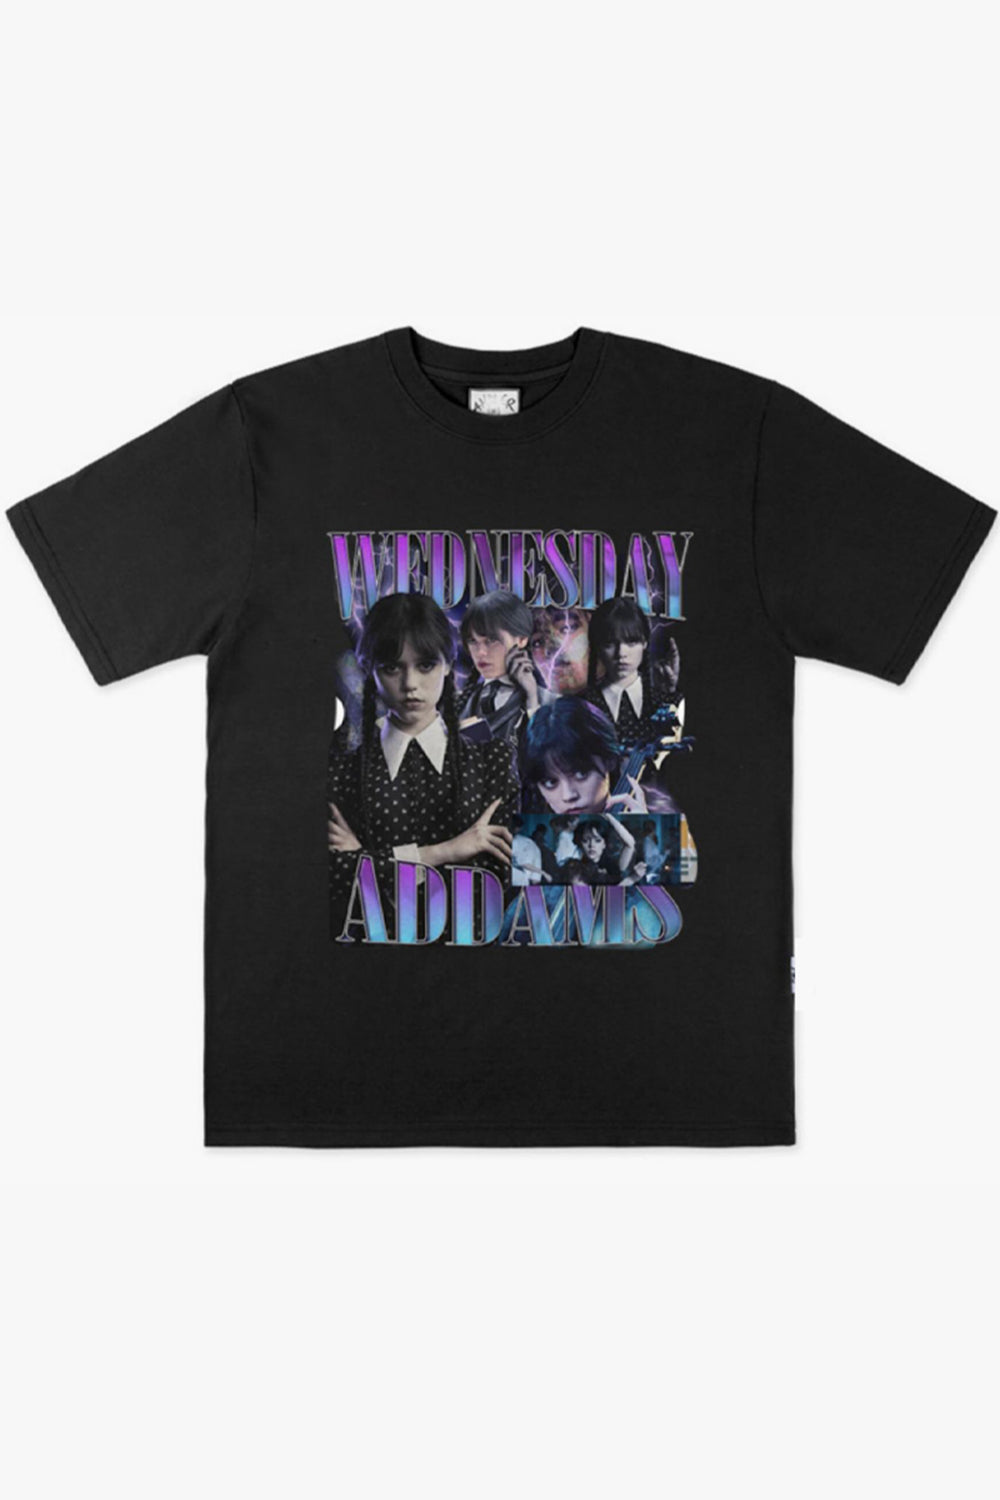 Wednesday Addams Aesthetic T-Shirt